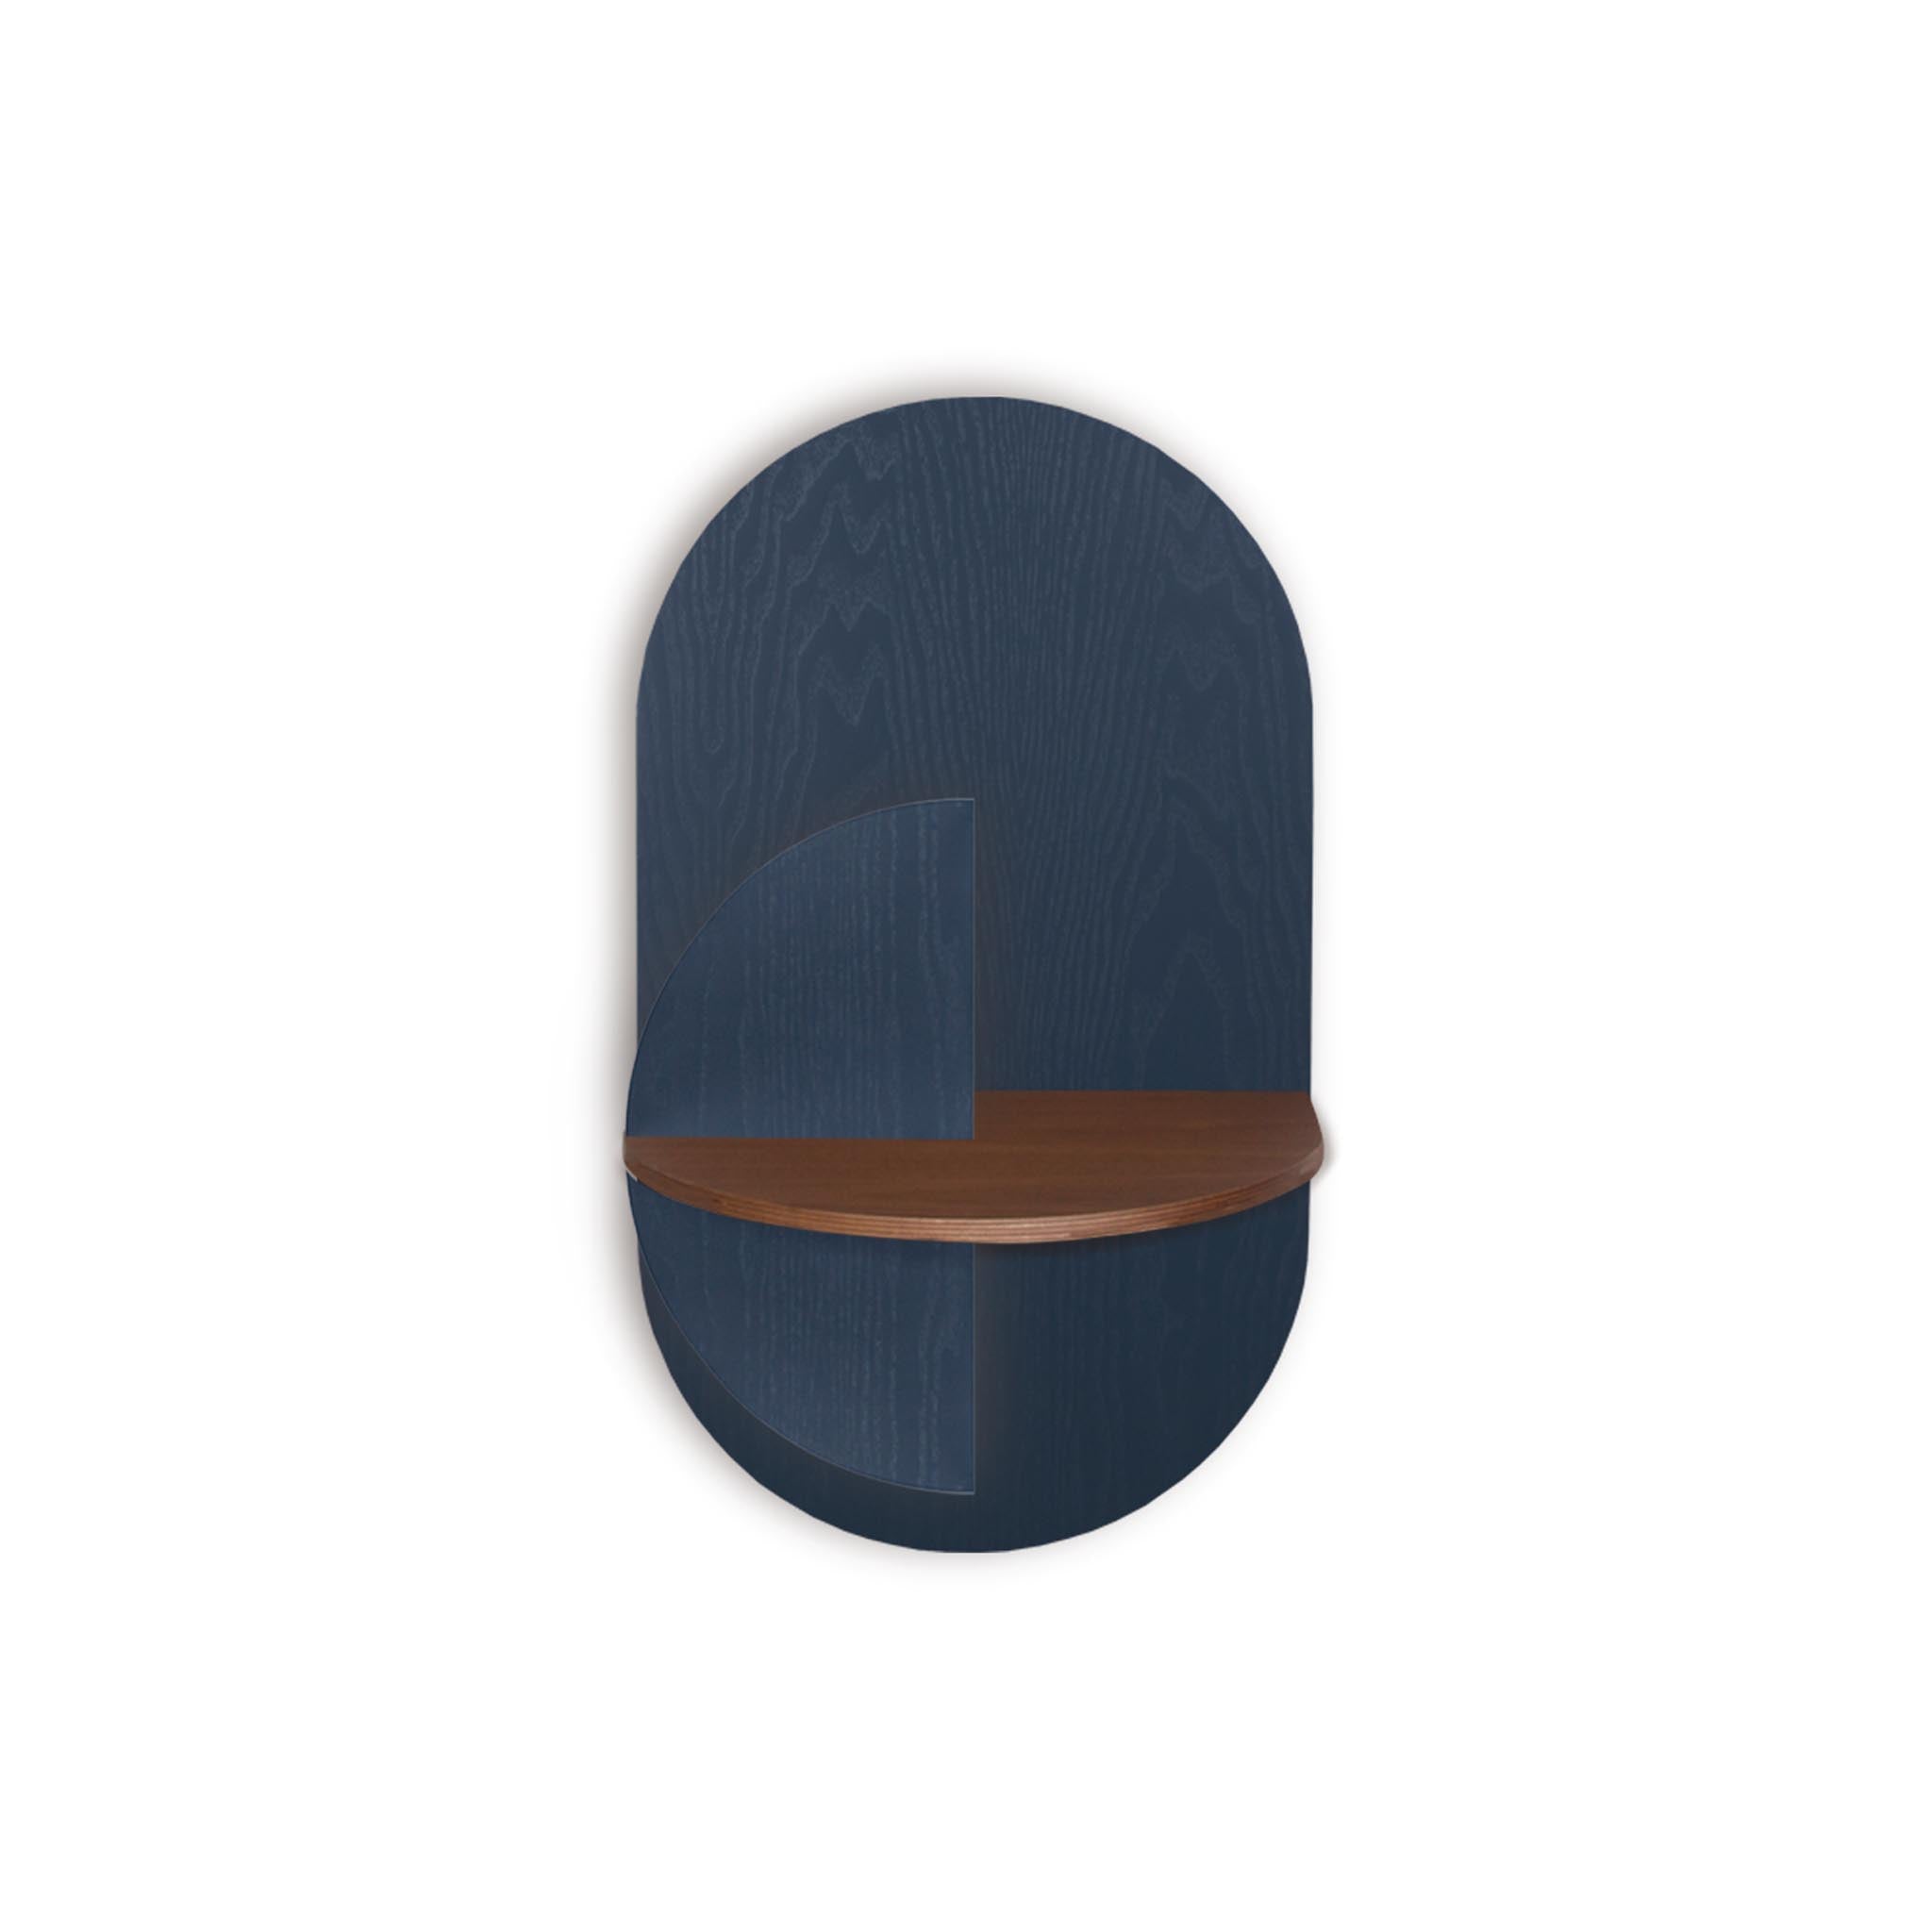 Alba slim floating nightstand · Blue oval